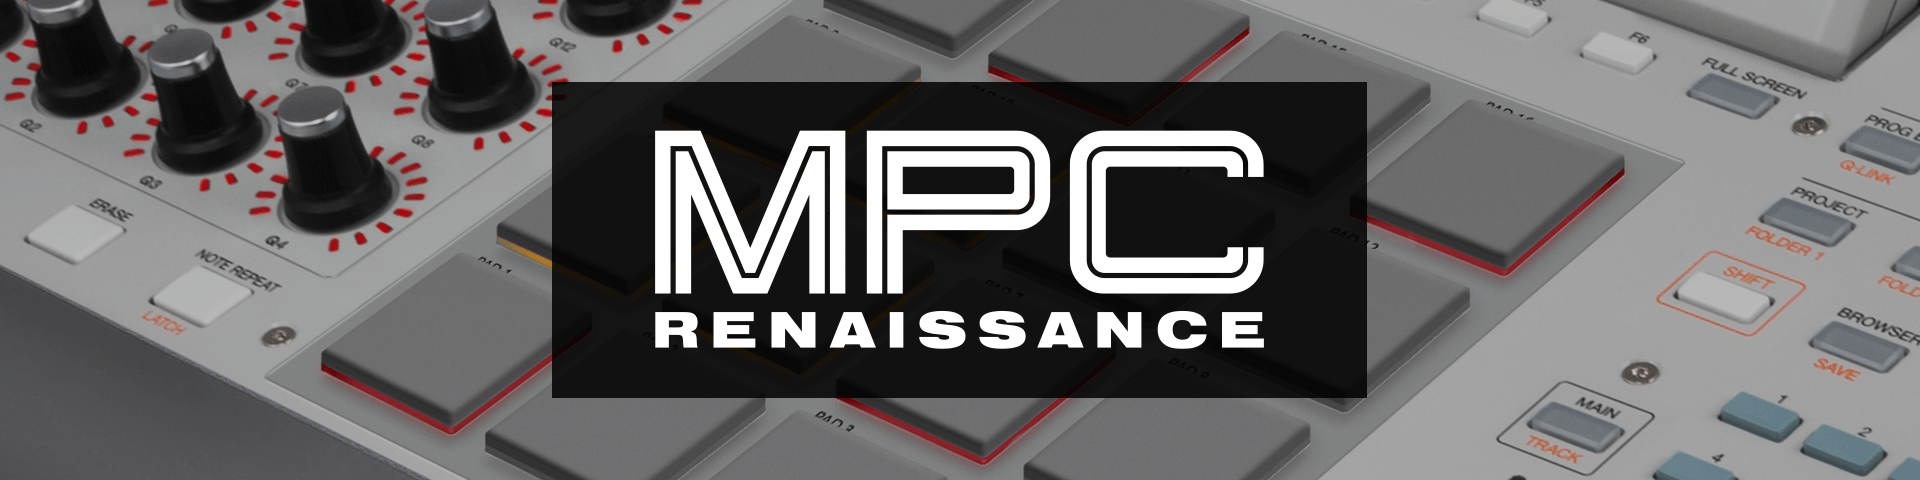 MPC Renaissance | Akai Pro